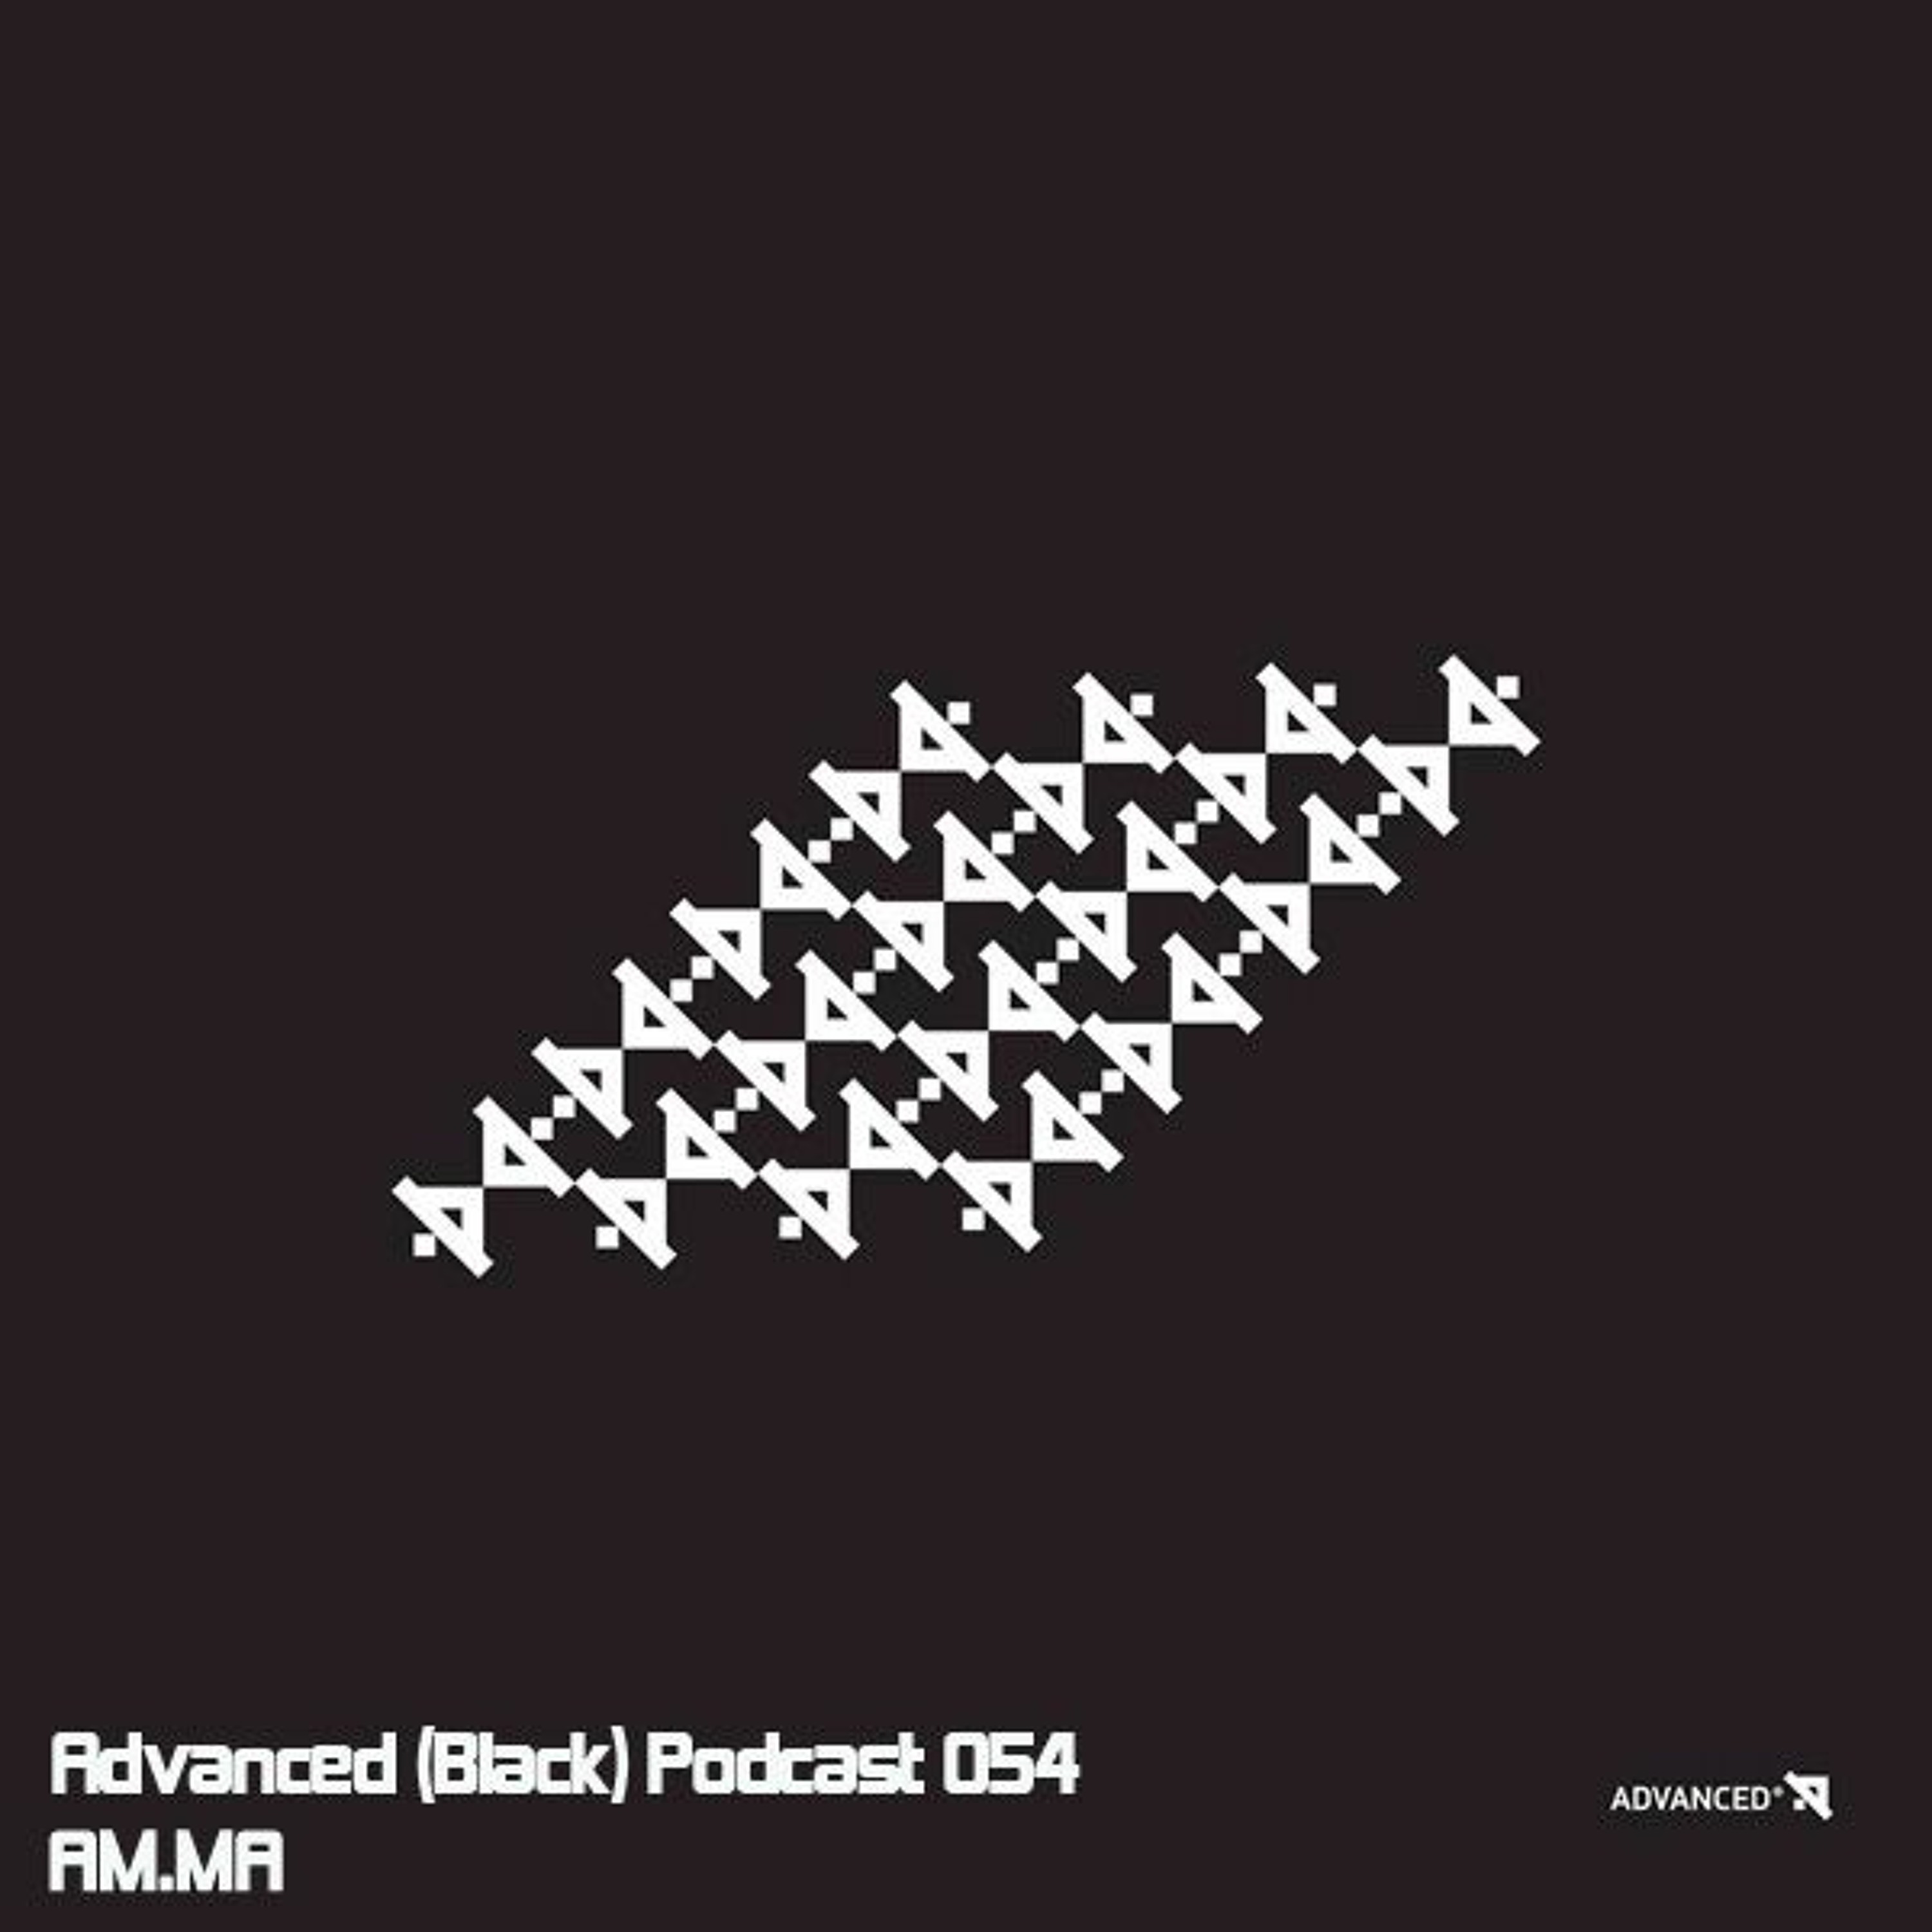 Advanced (Black) Podcast 054 with AM.MA